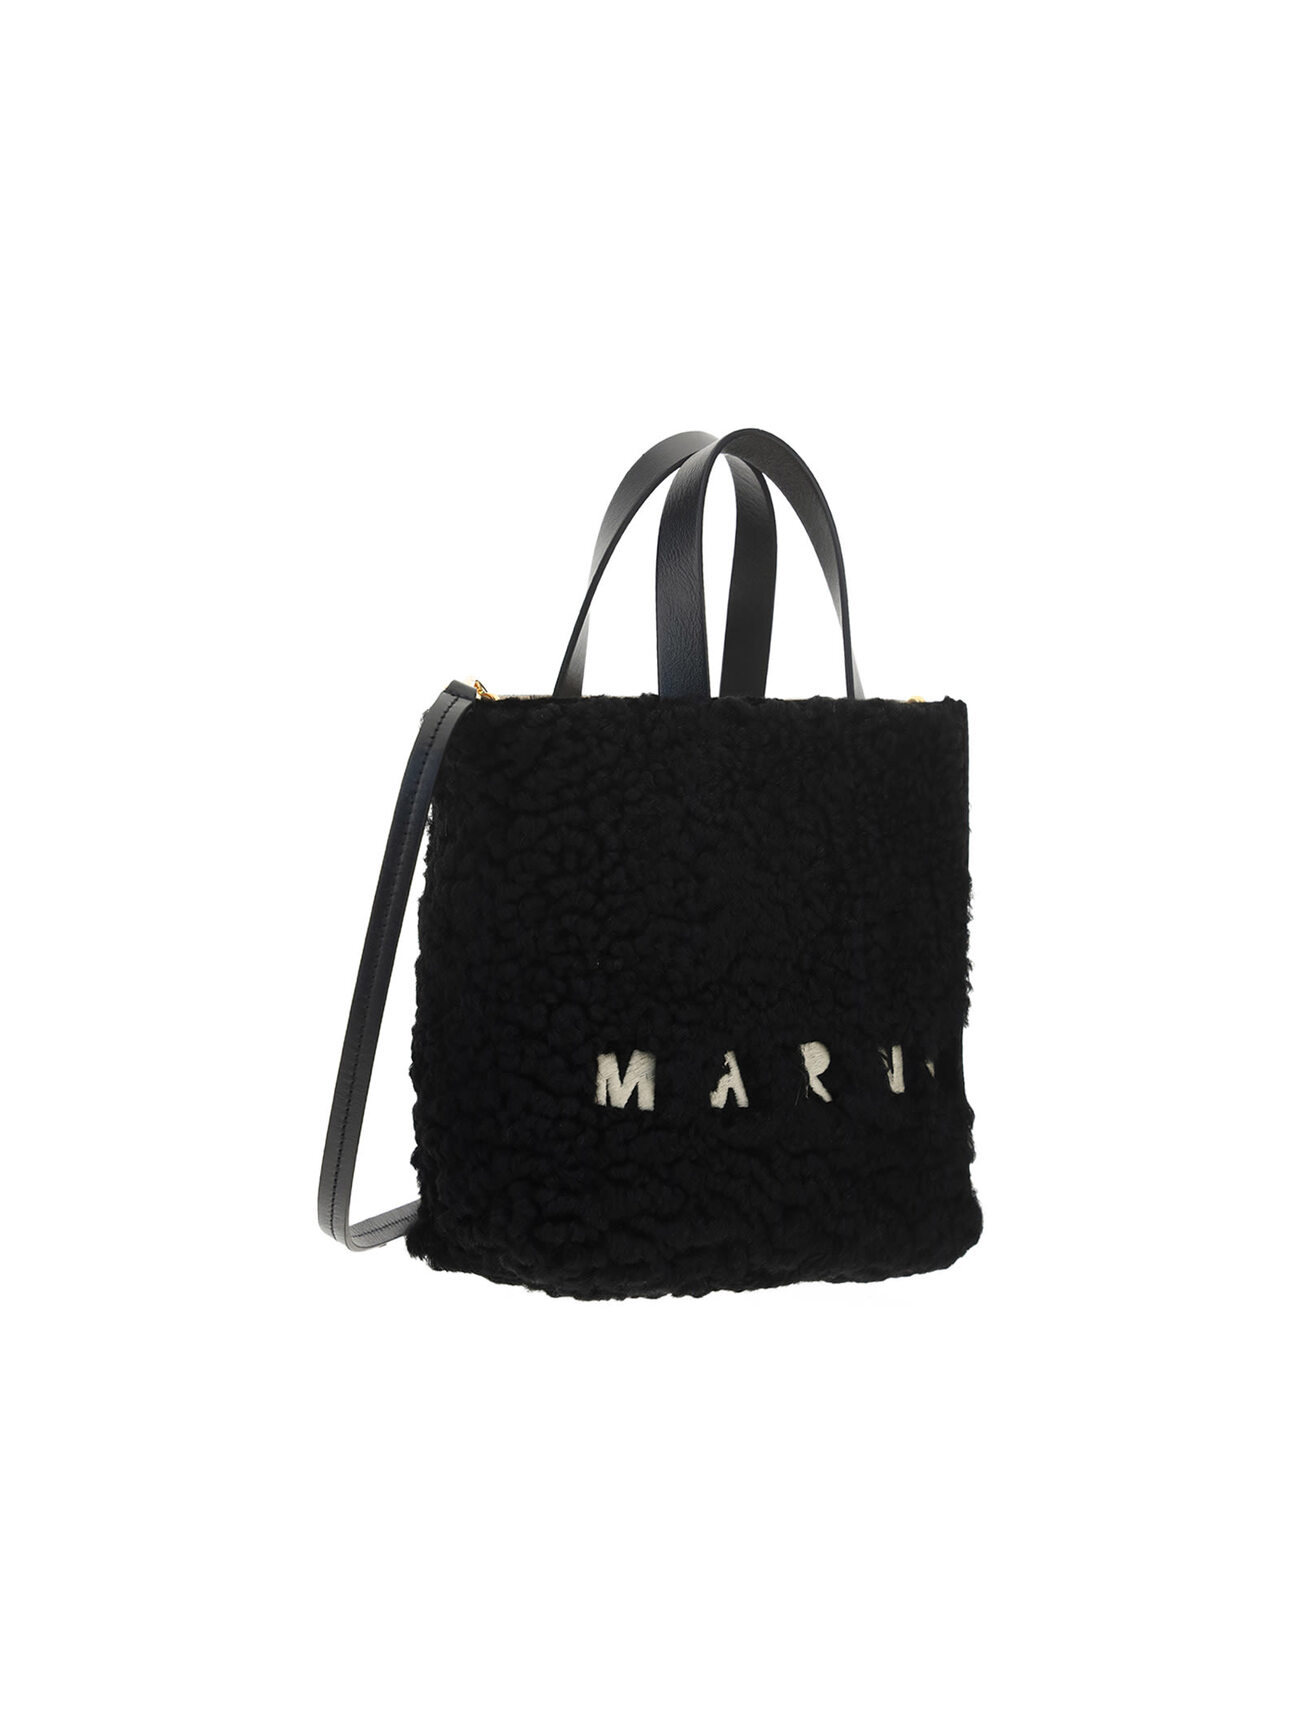 Marni Shopping Bag in black